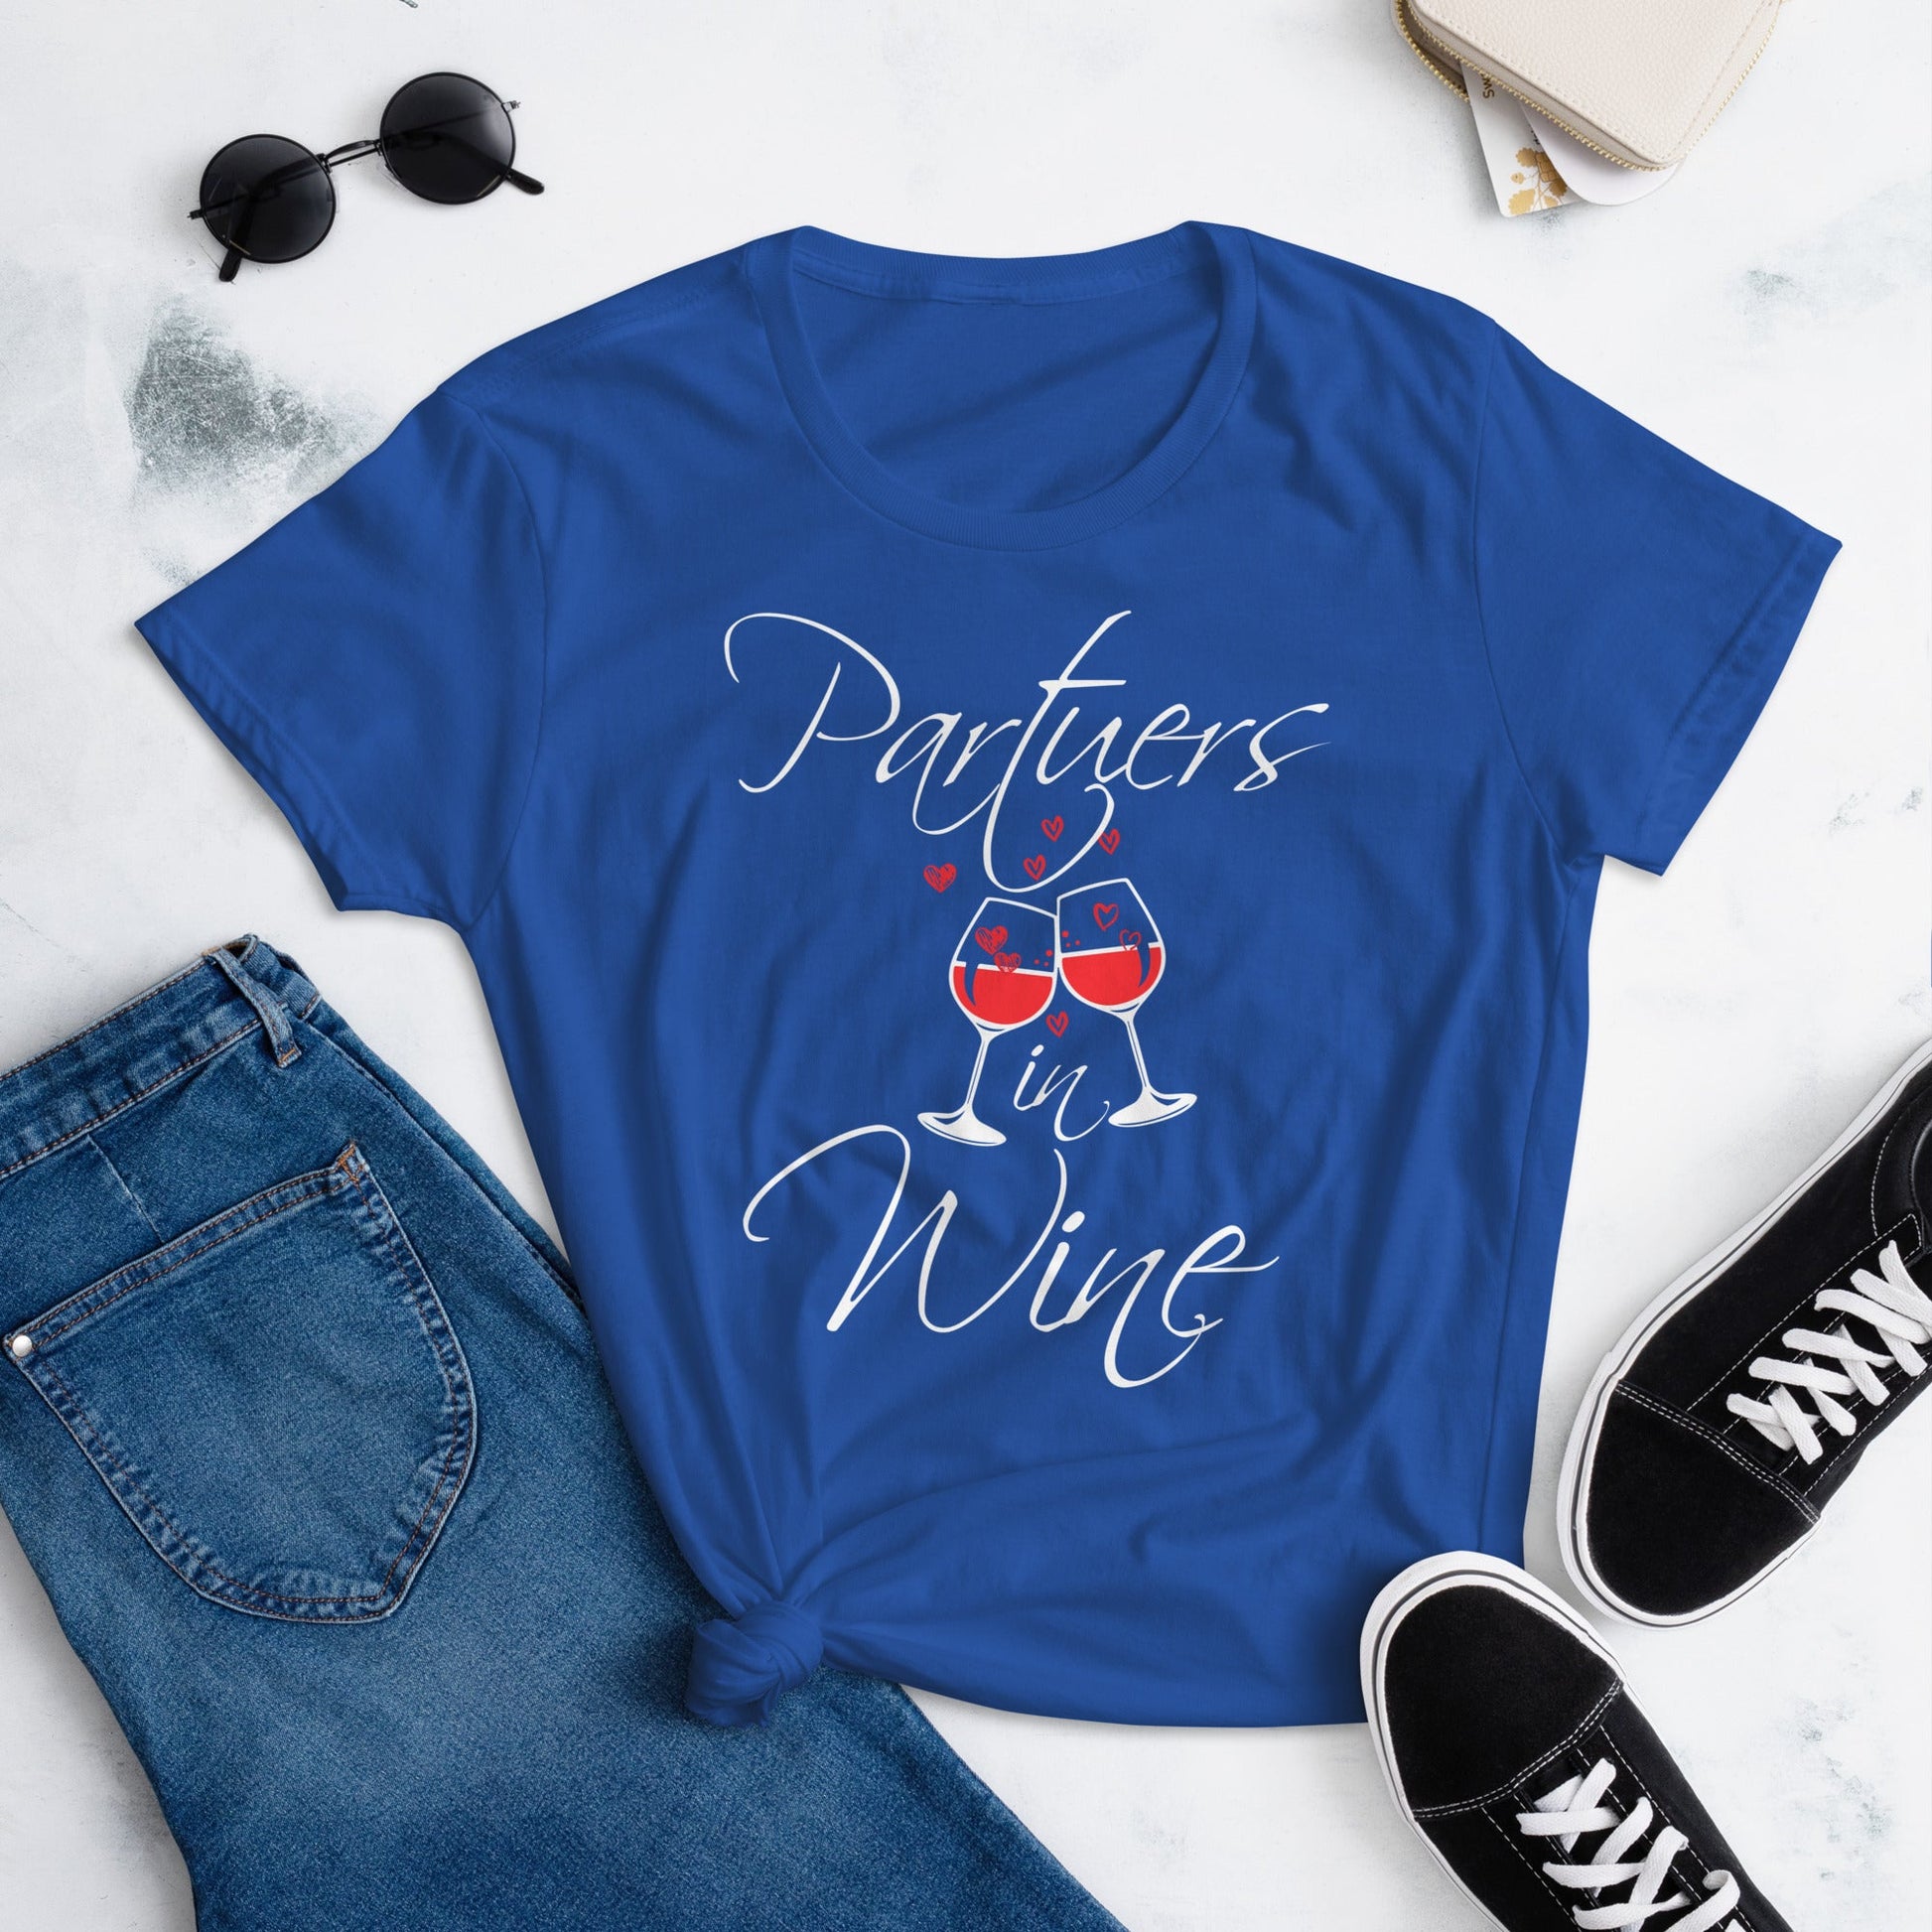 Women's 'Partners in Wine' Tee - Sustainable & Stylish Cotton Shirt